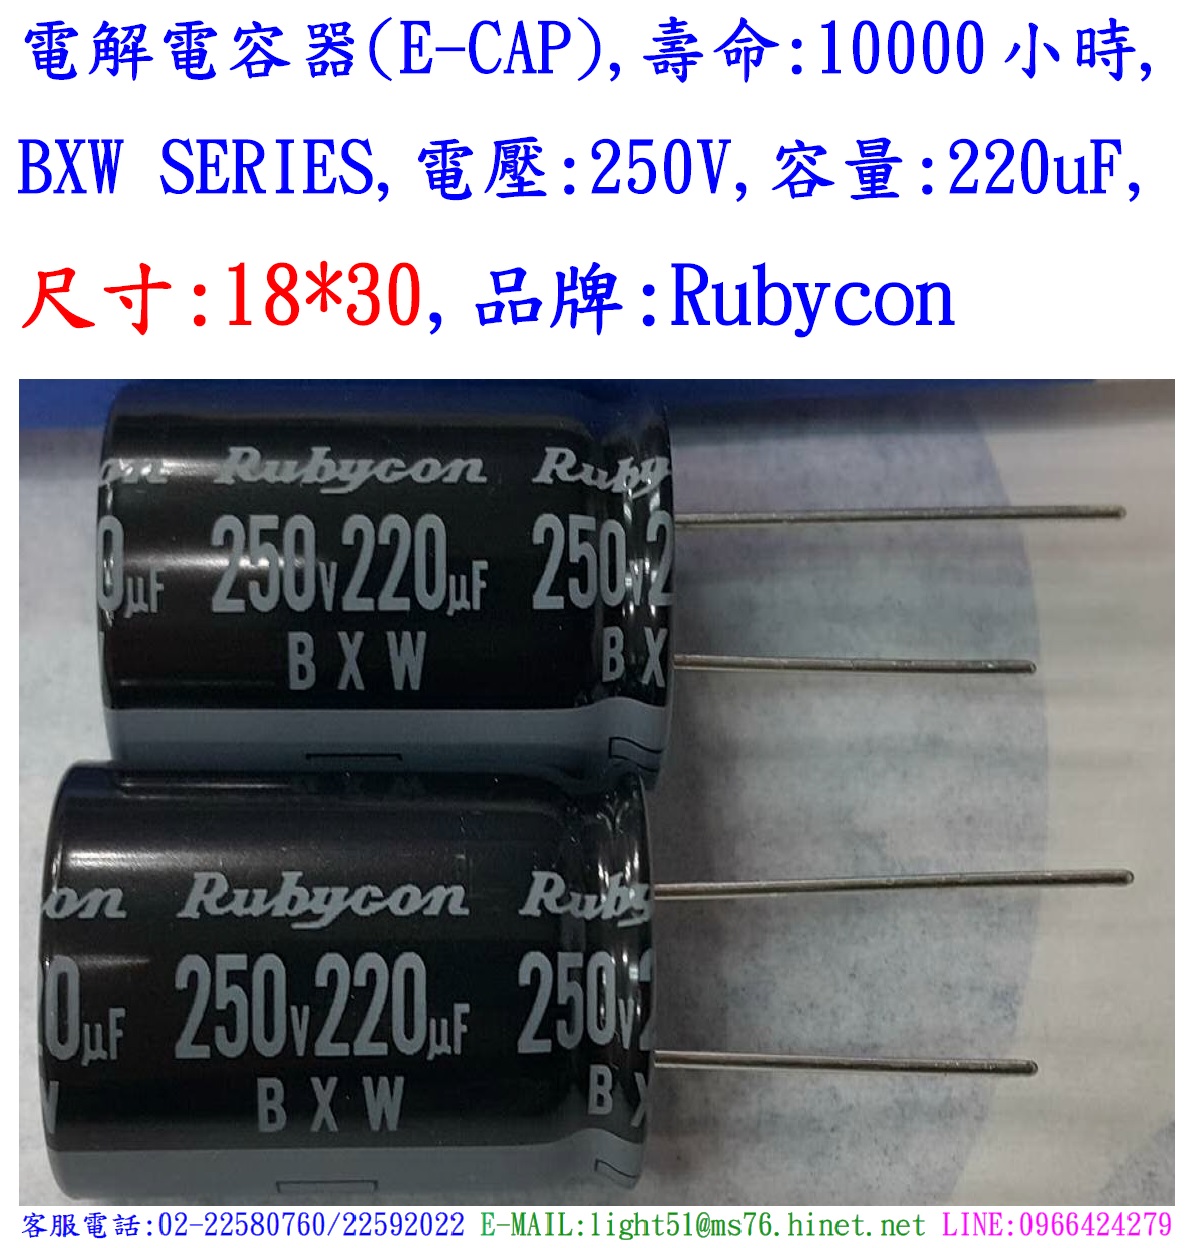 BXW,250V,220uF,尺寸:18*30,電解電容器,壽命:10000小時,Rubycon